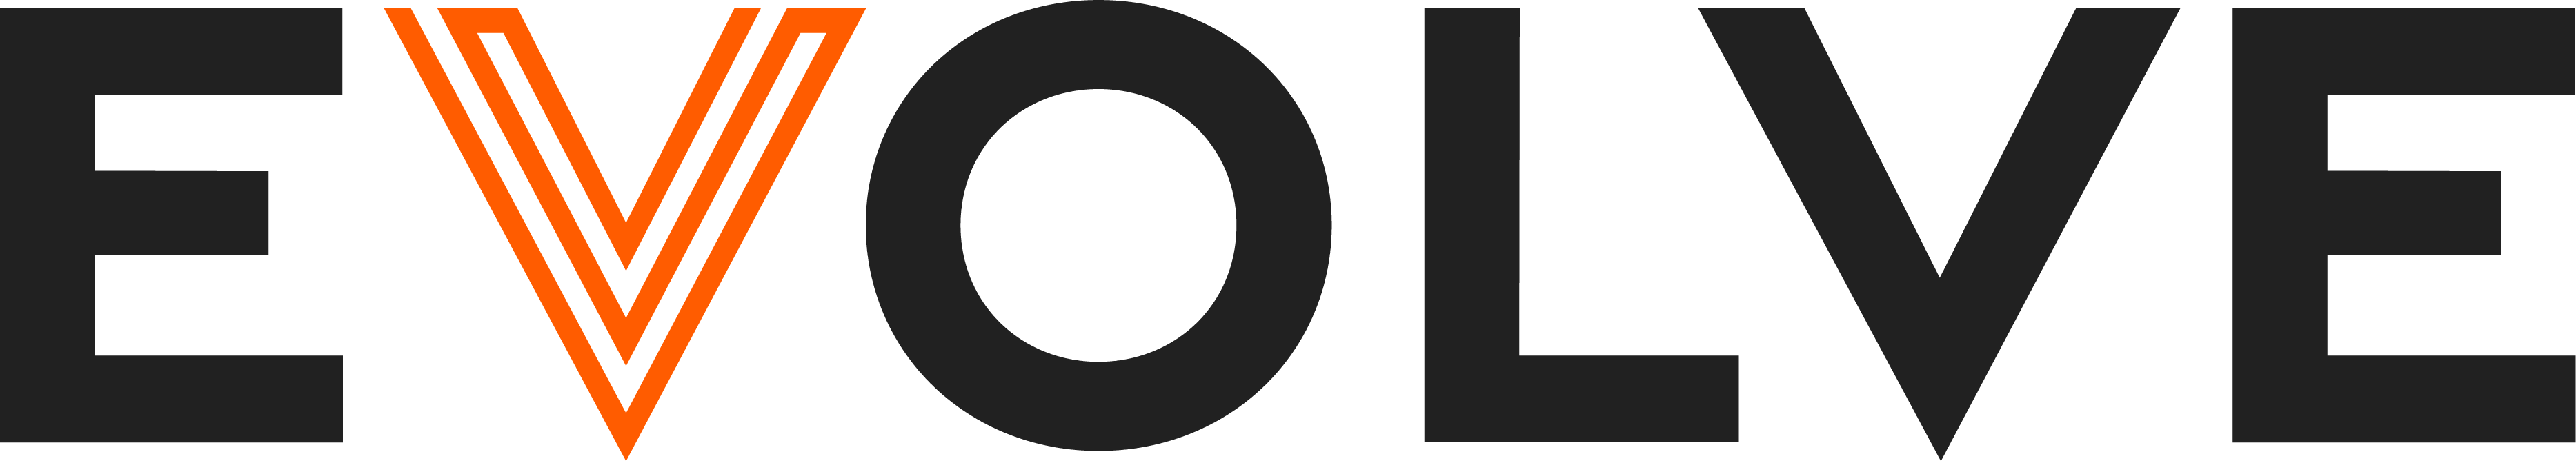 eVolve_Logo_Full-Color